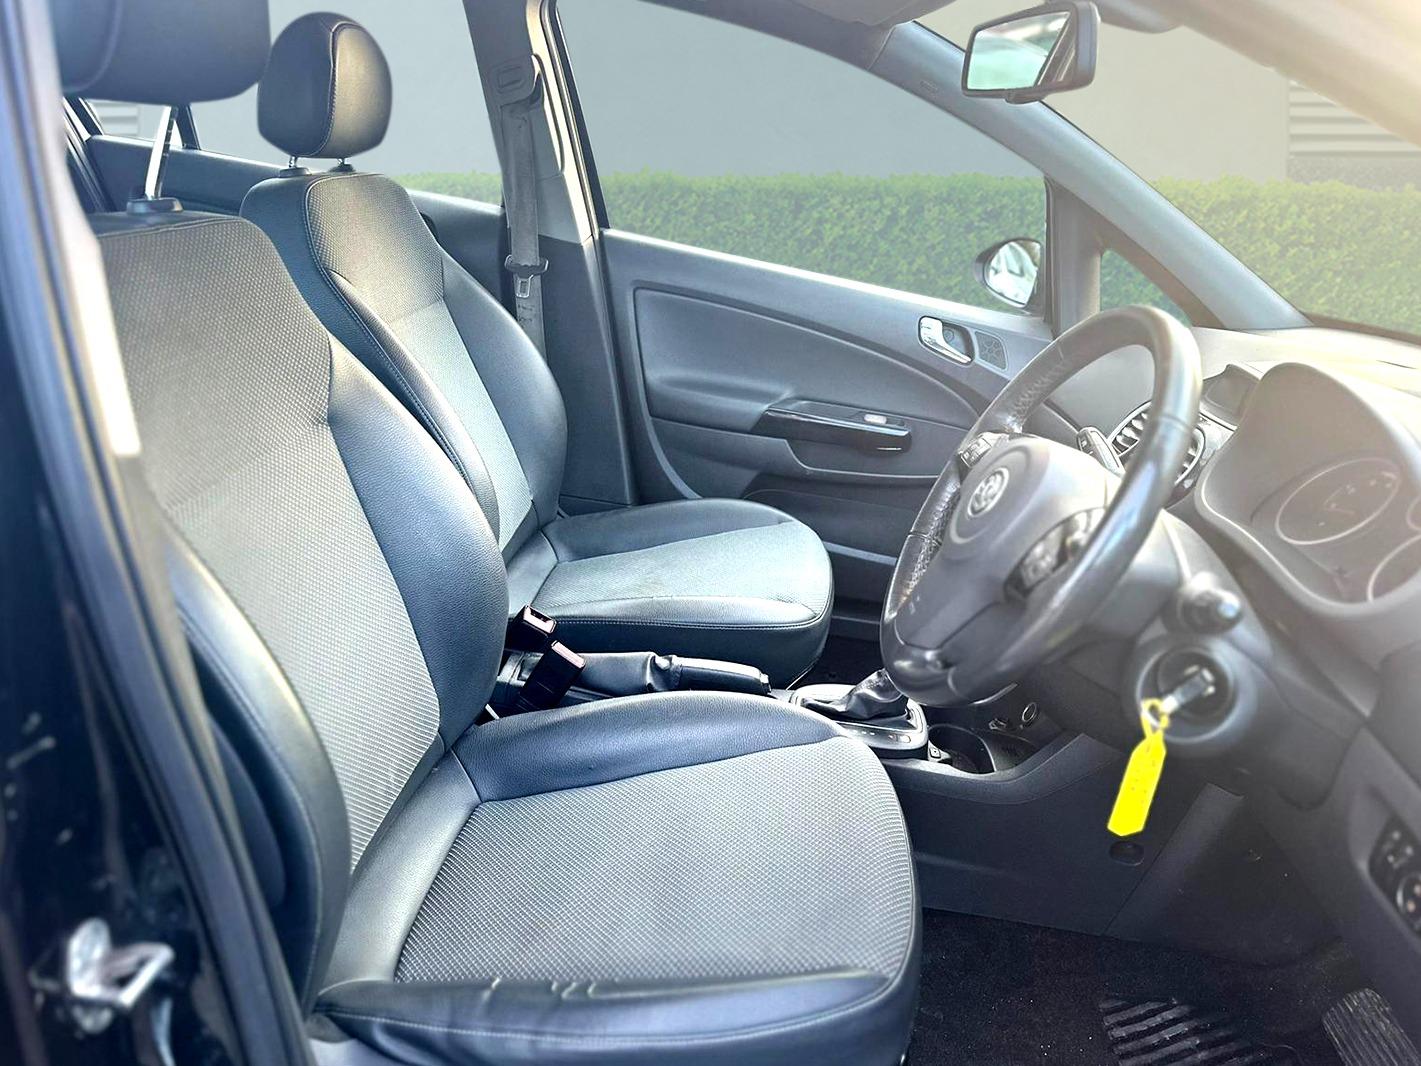 Vauxhall Corsa 1.4i 16v SE Hatchback 5dr Petrol Automatic (a/c) (138 g/km, 99 bhp)